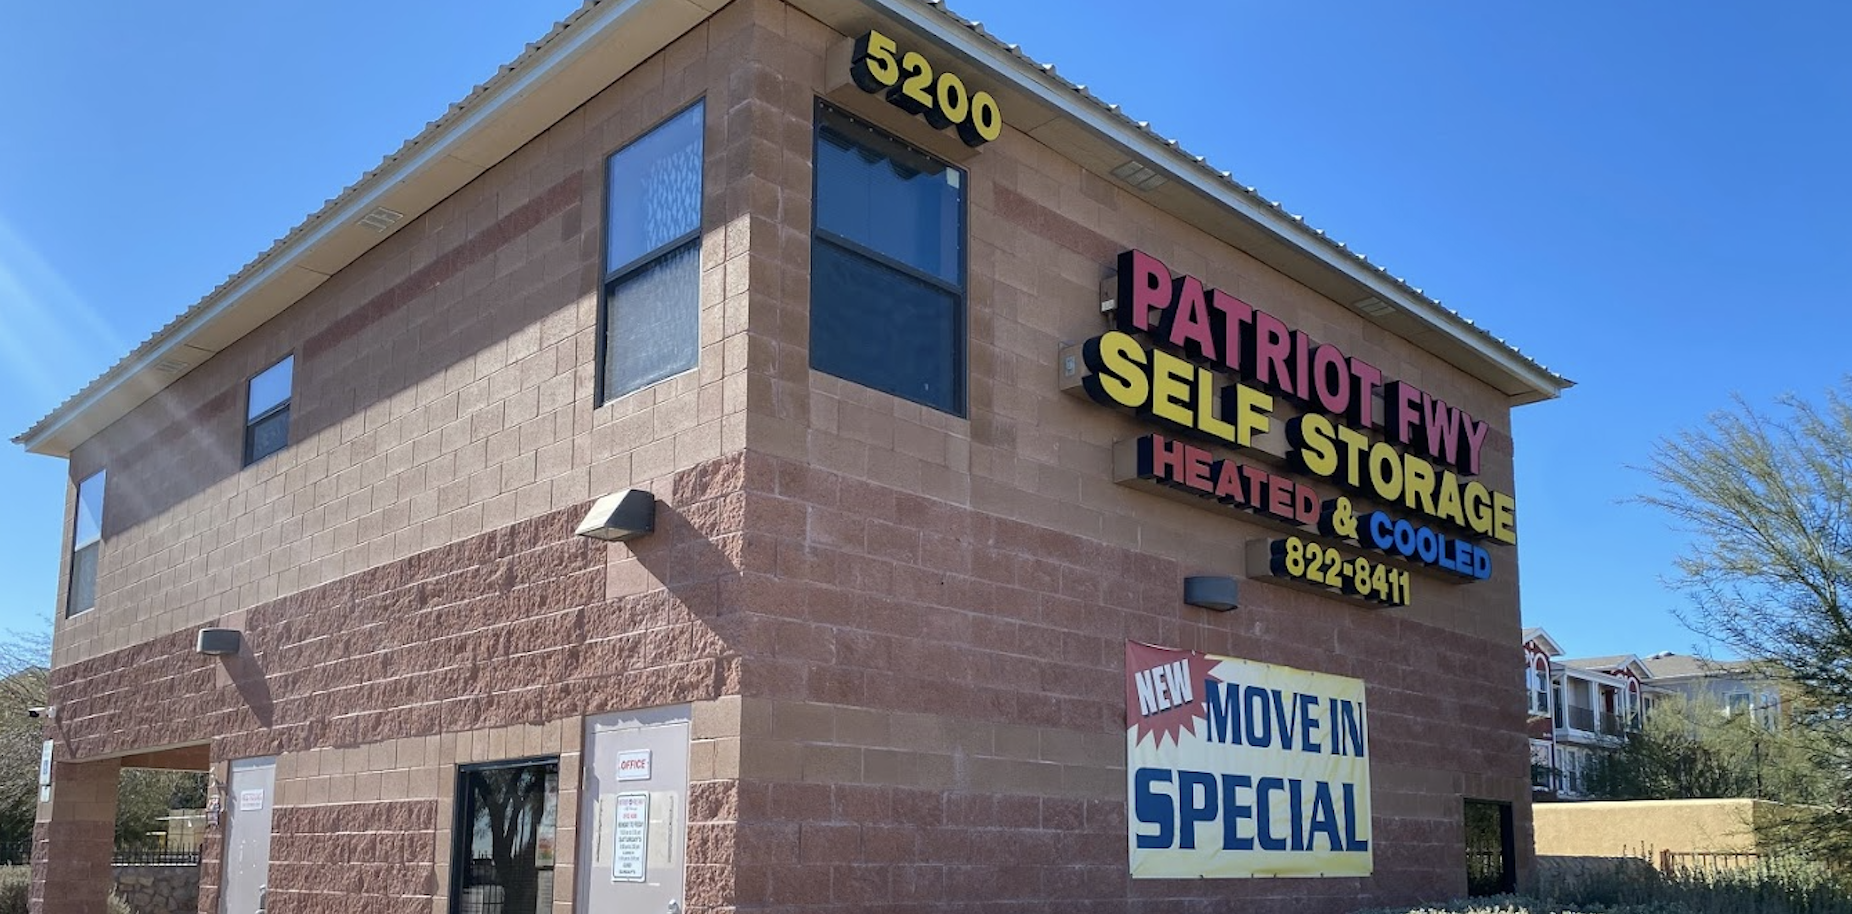 Office for Patriot Freeway Self Storage in El Paso, TX